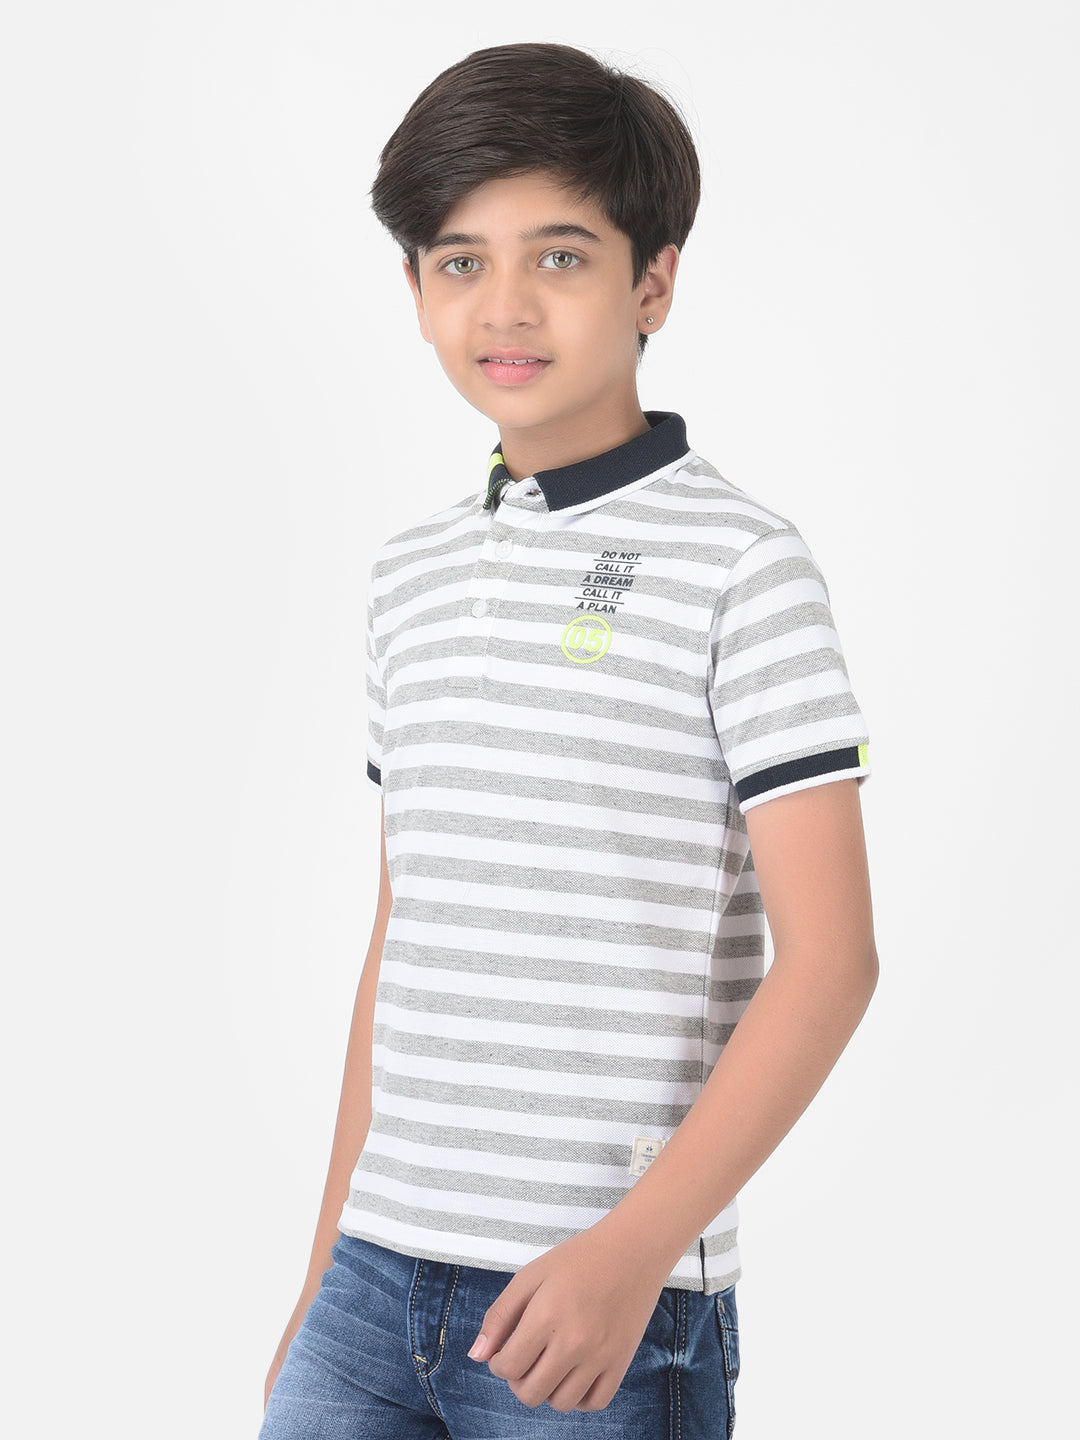 Grey Striped Polo T-shirt - Boys T-Shirts